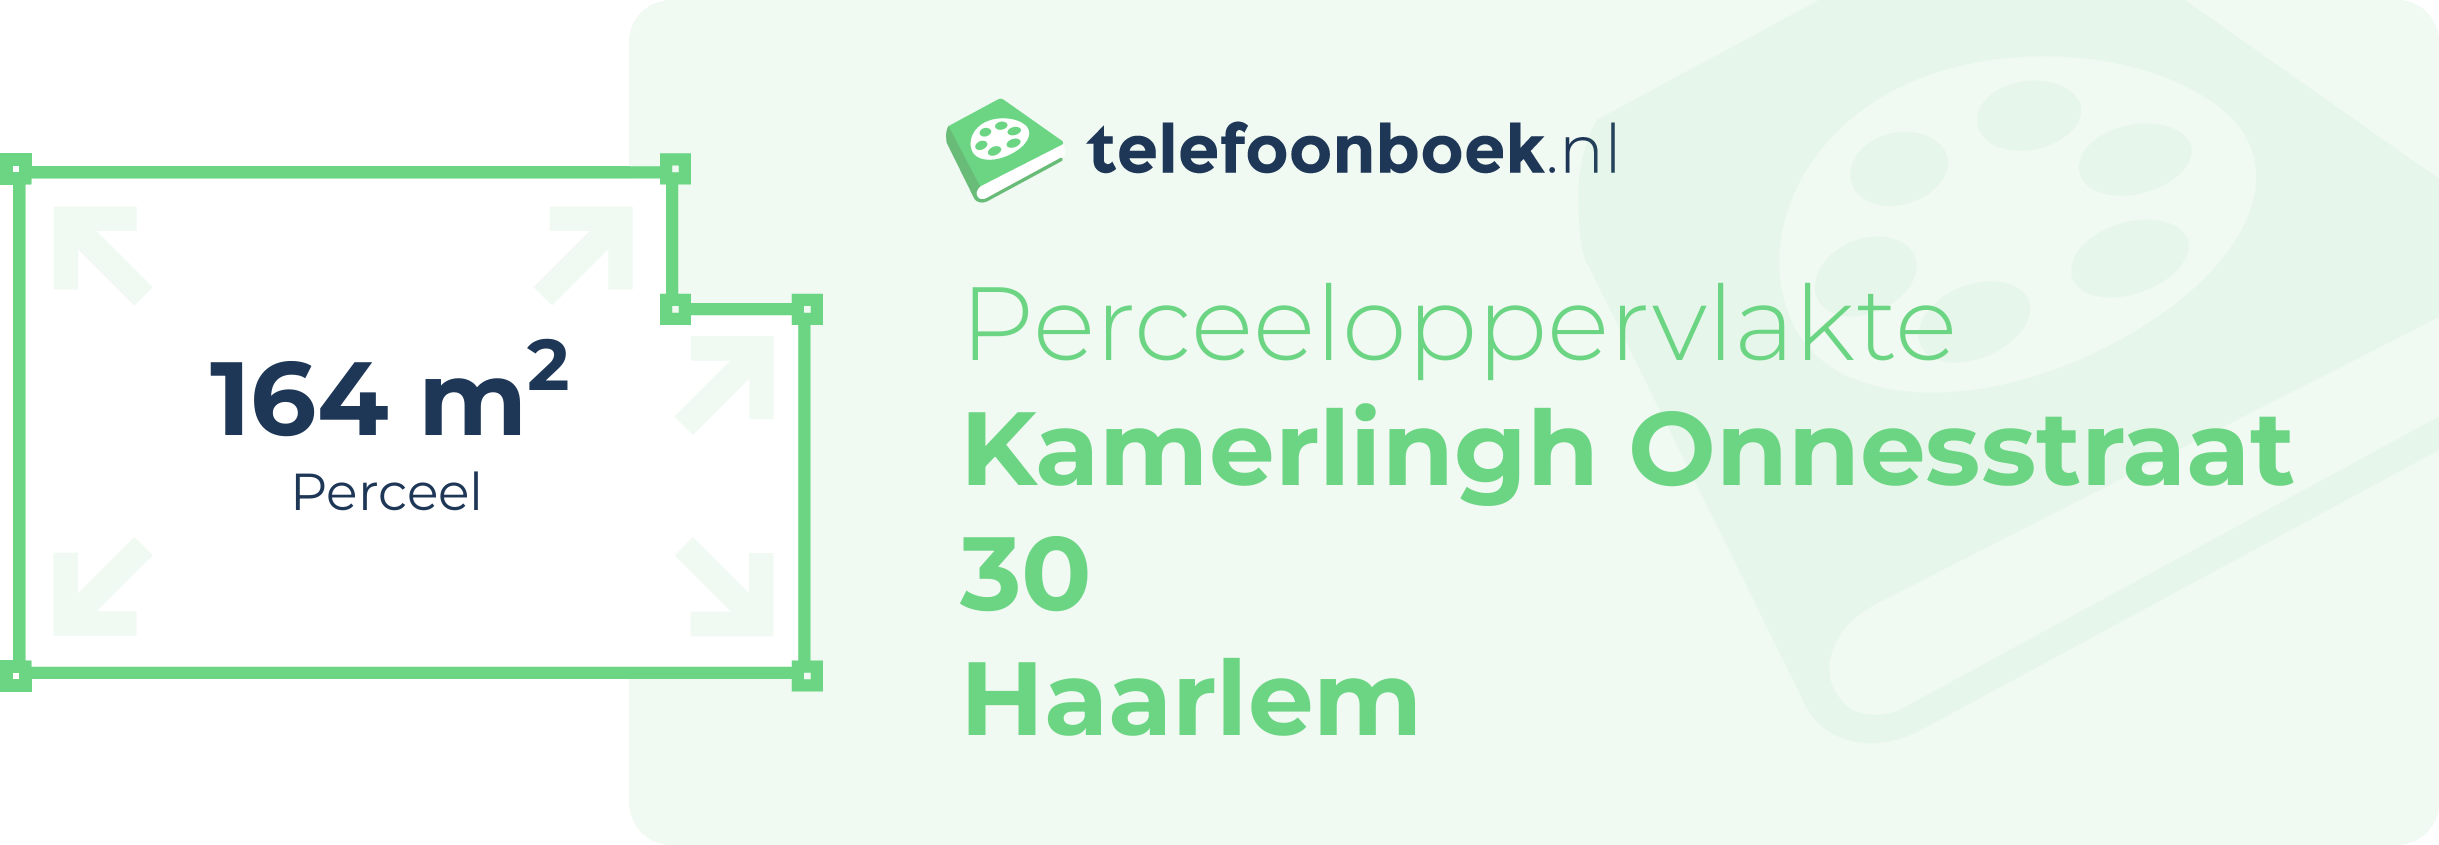 Perceeloppervlakte Kamerlingh Onnesstraat 30 Haarlem